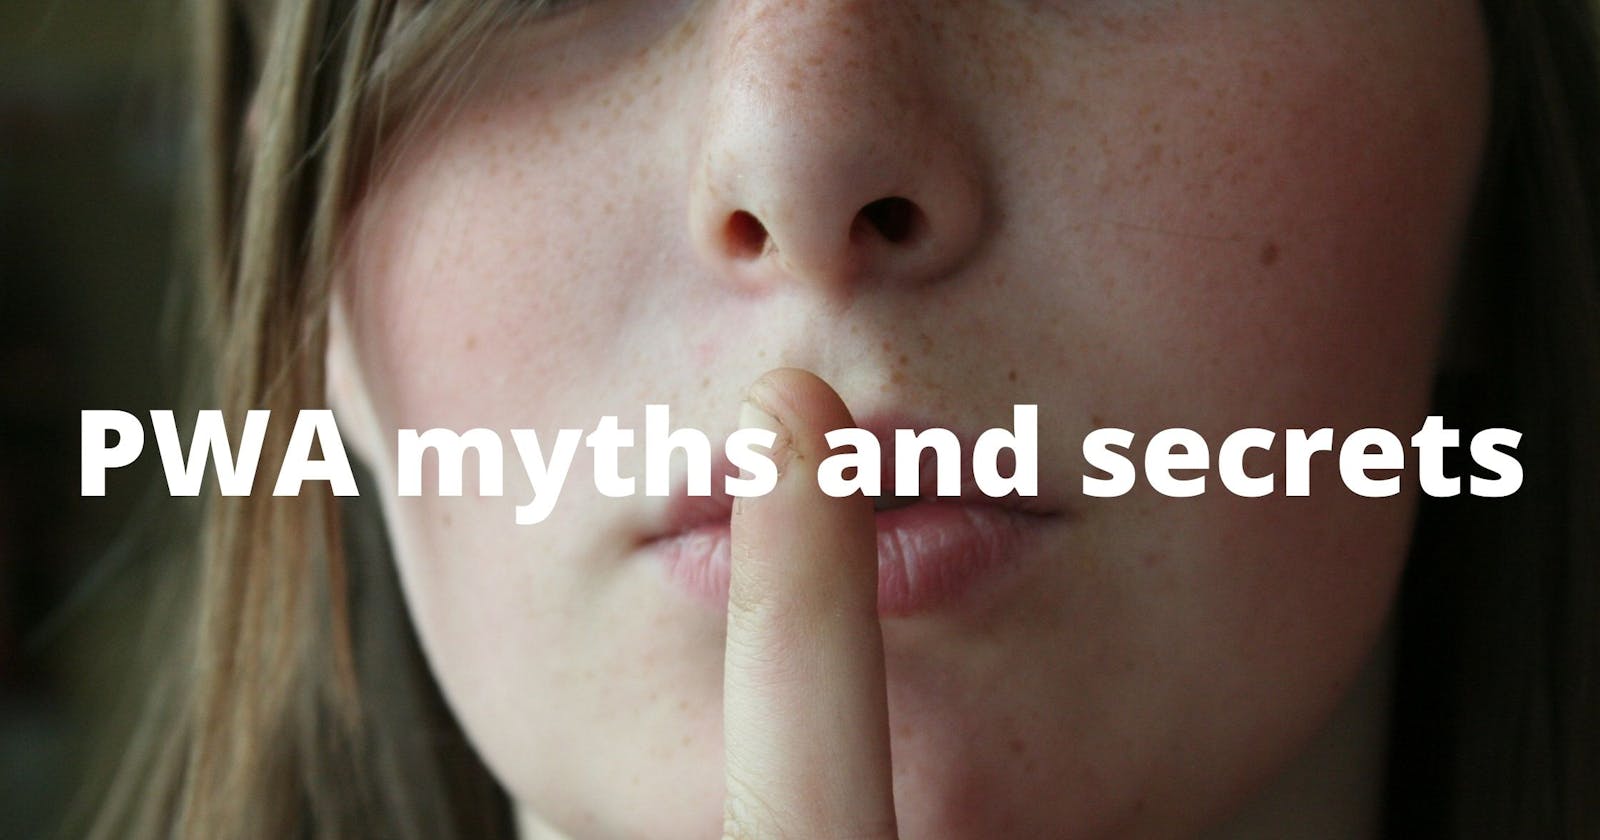 PWA myths and secrets revealed